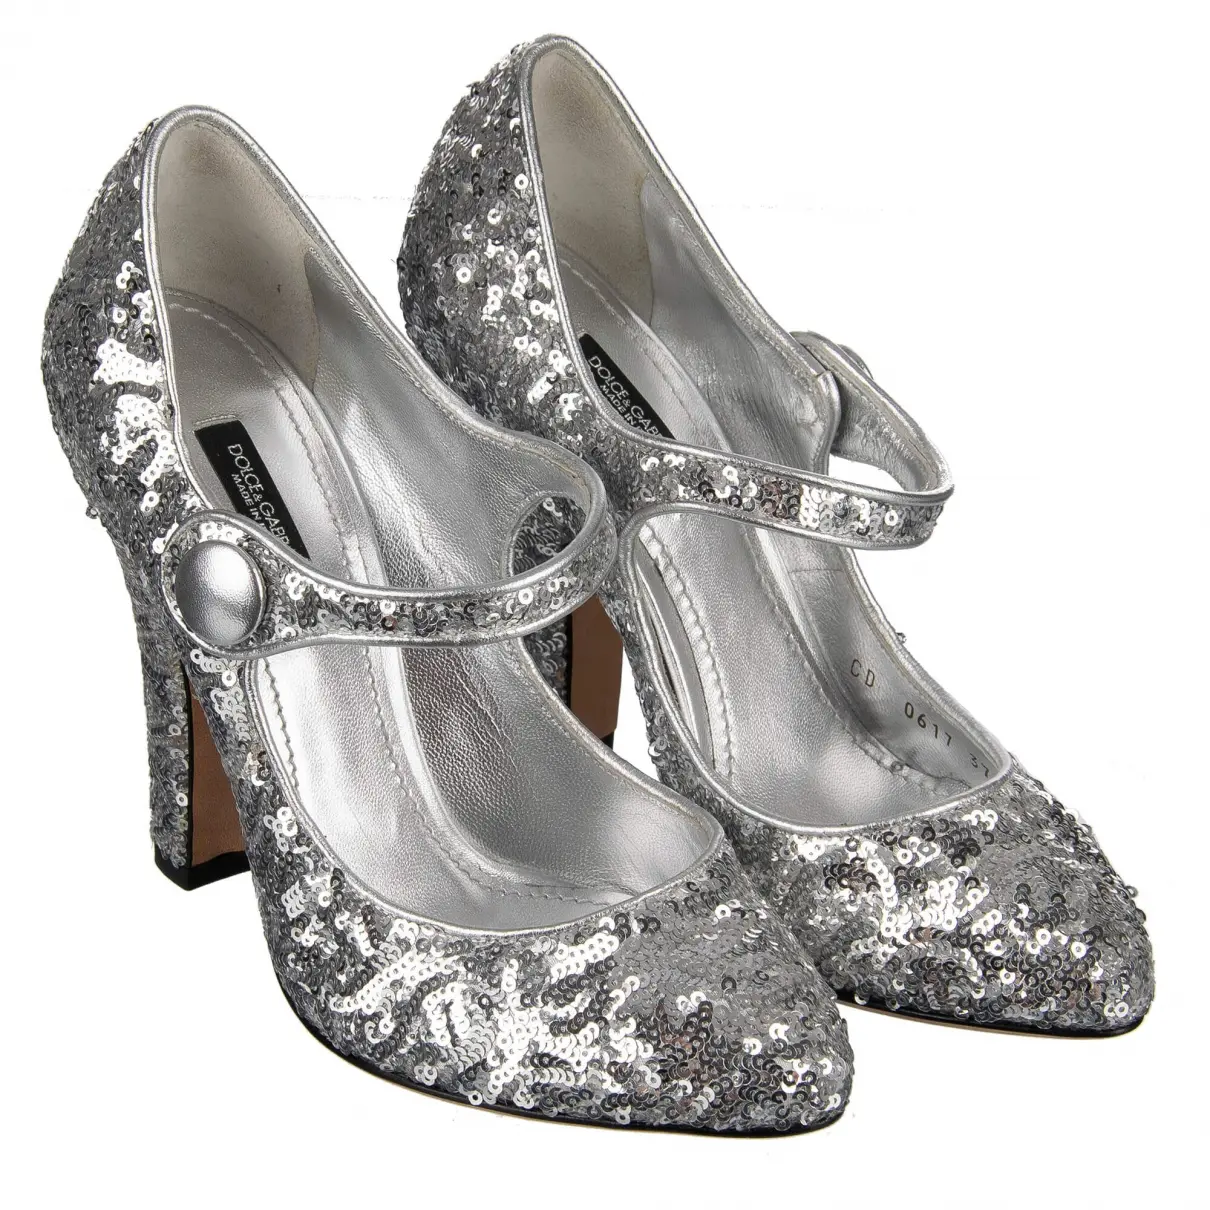 Dolce & Gabbana Glitter heels for sale